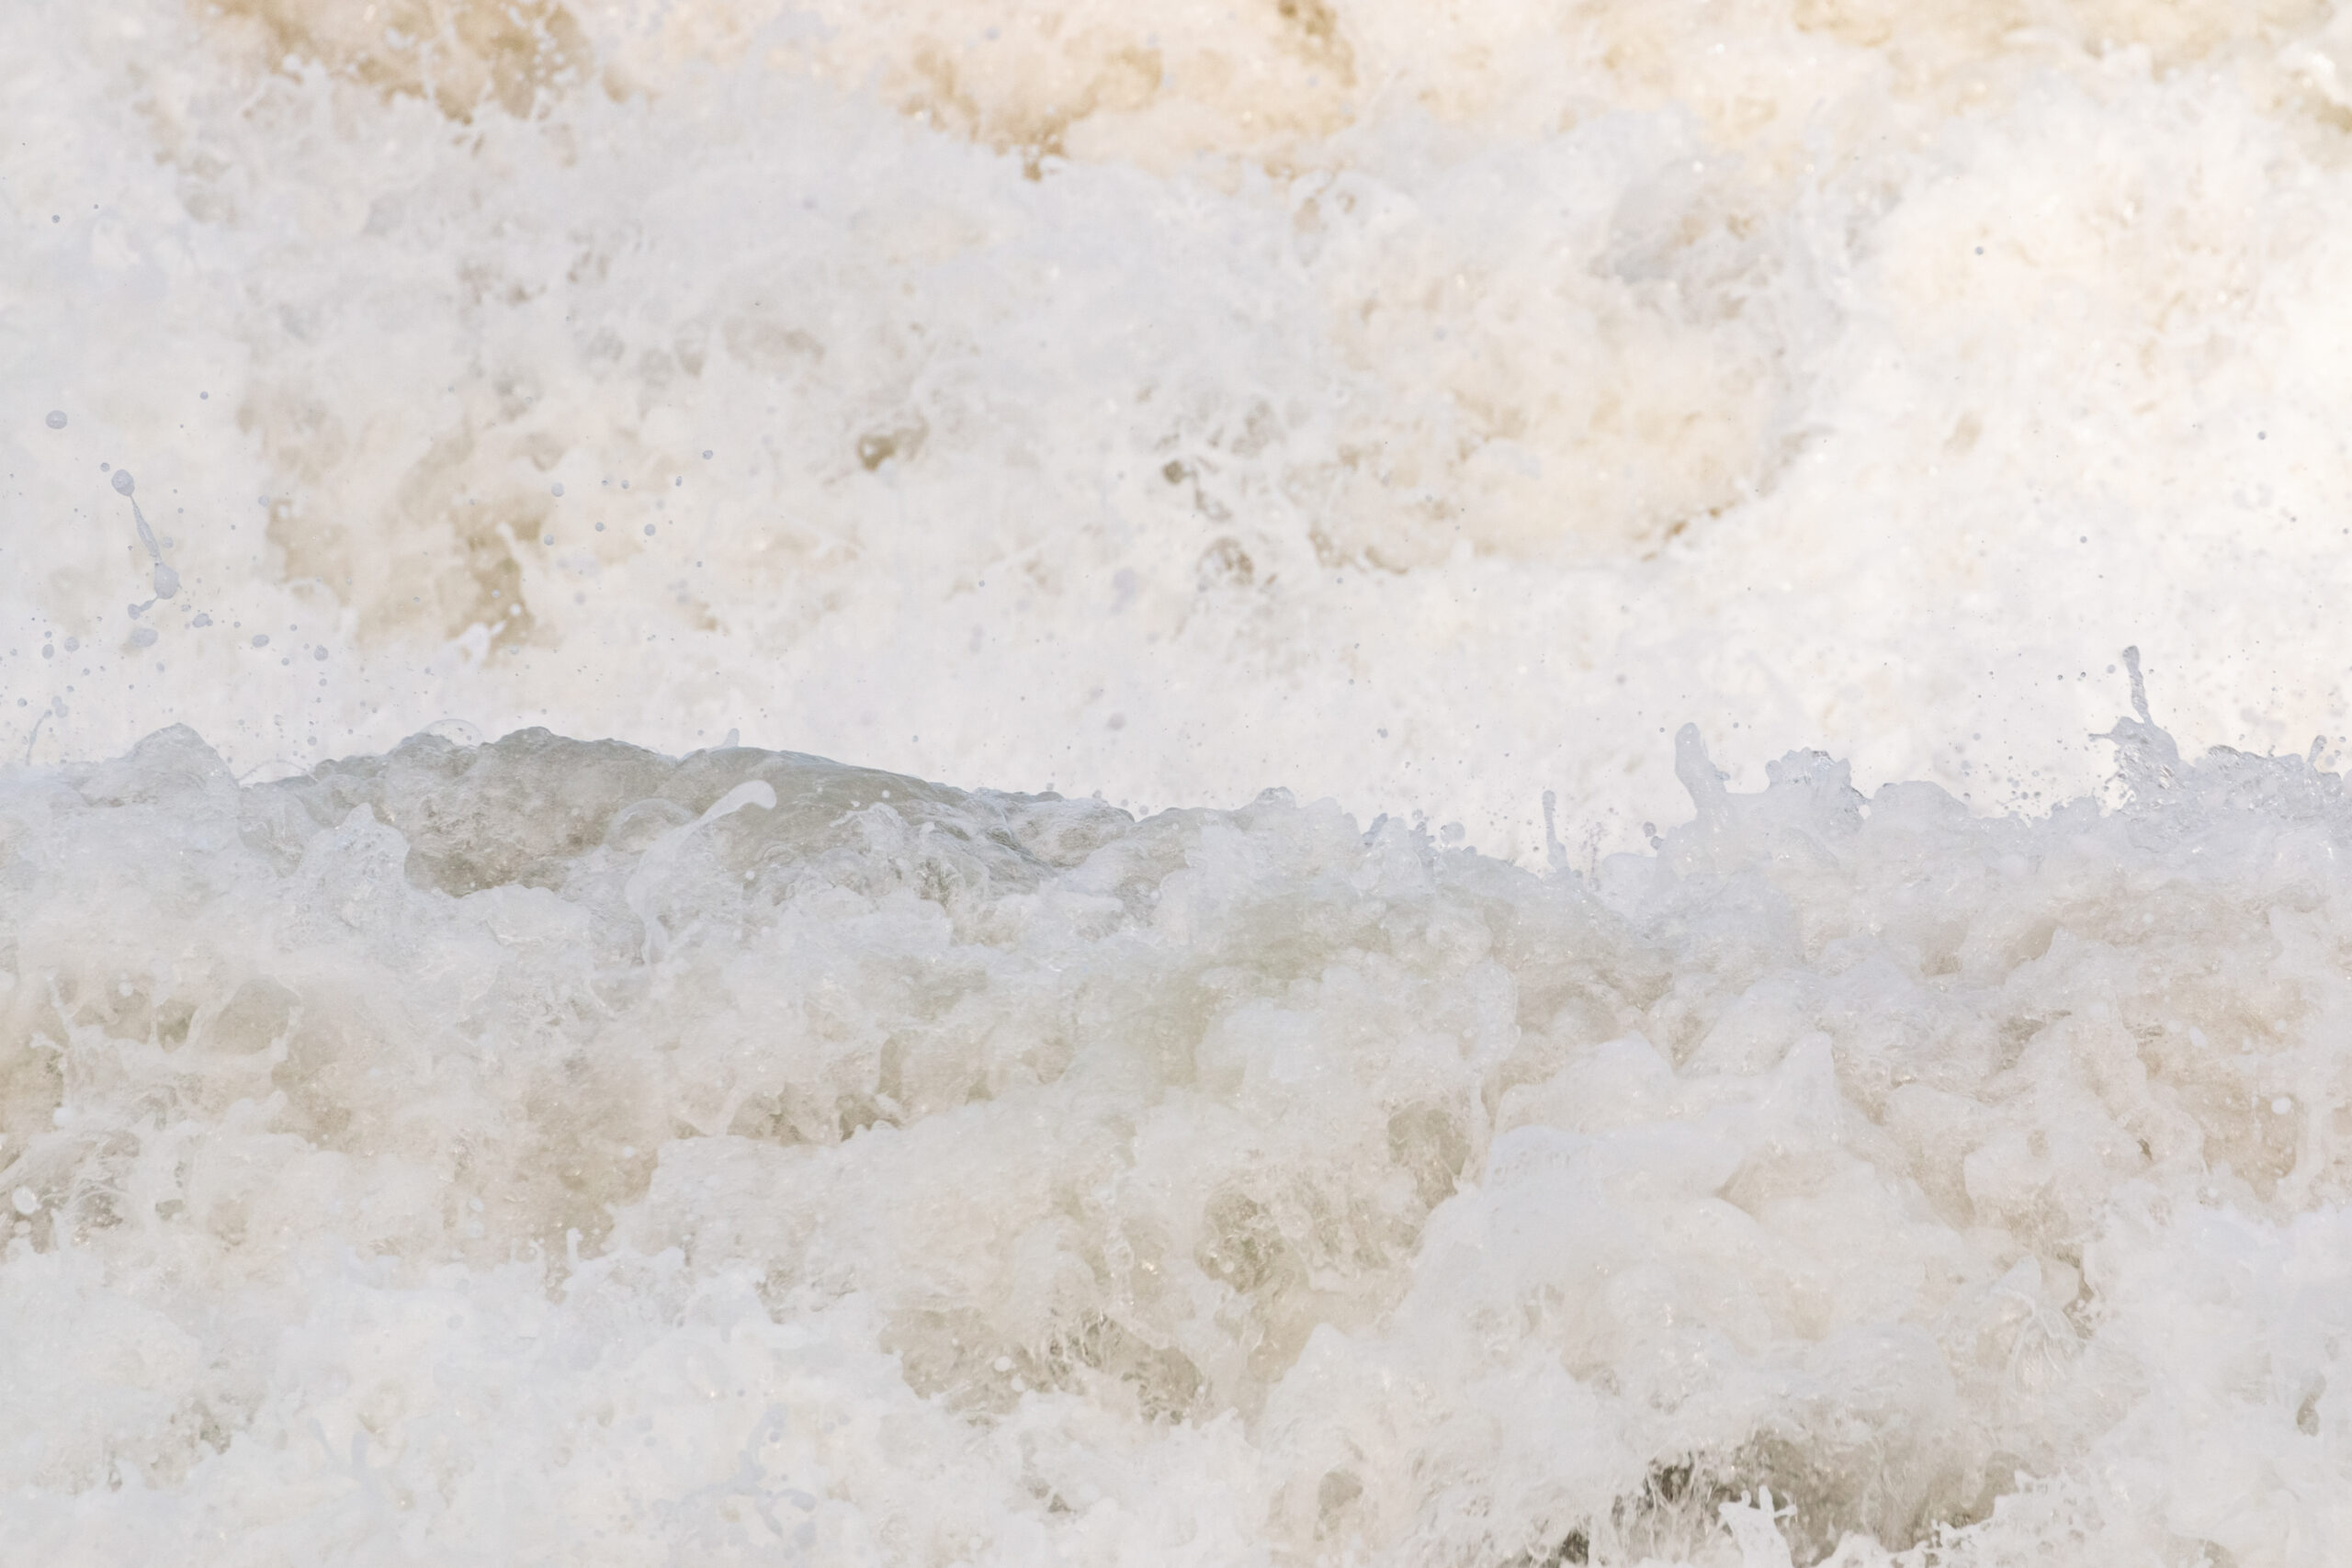 abstract ocean photography. Close-up image of splashing ocean by the photography Leonardo Ureña.